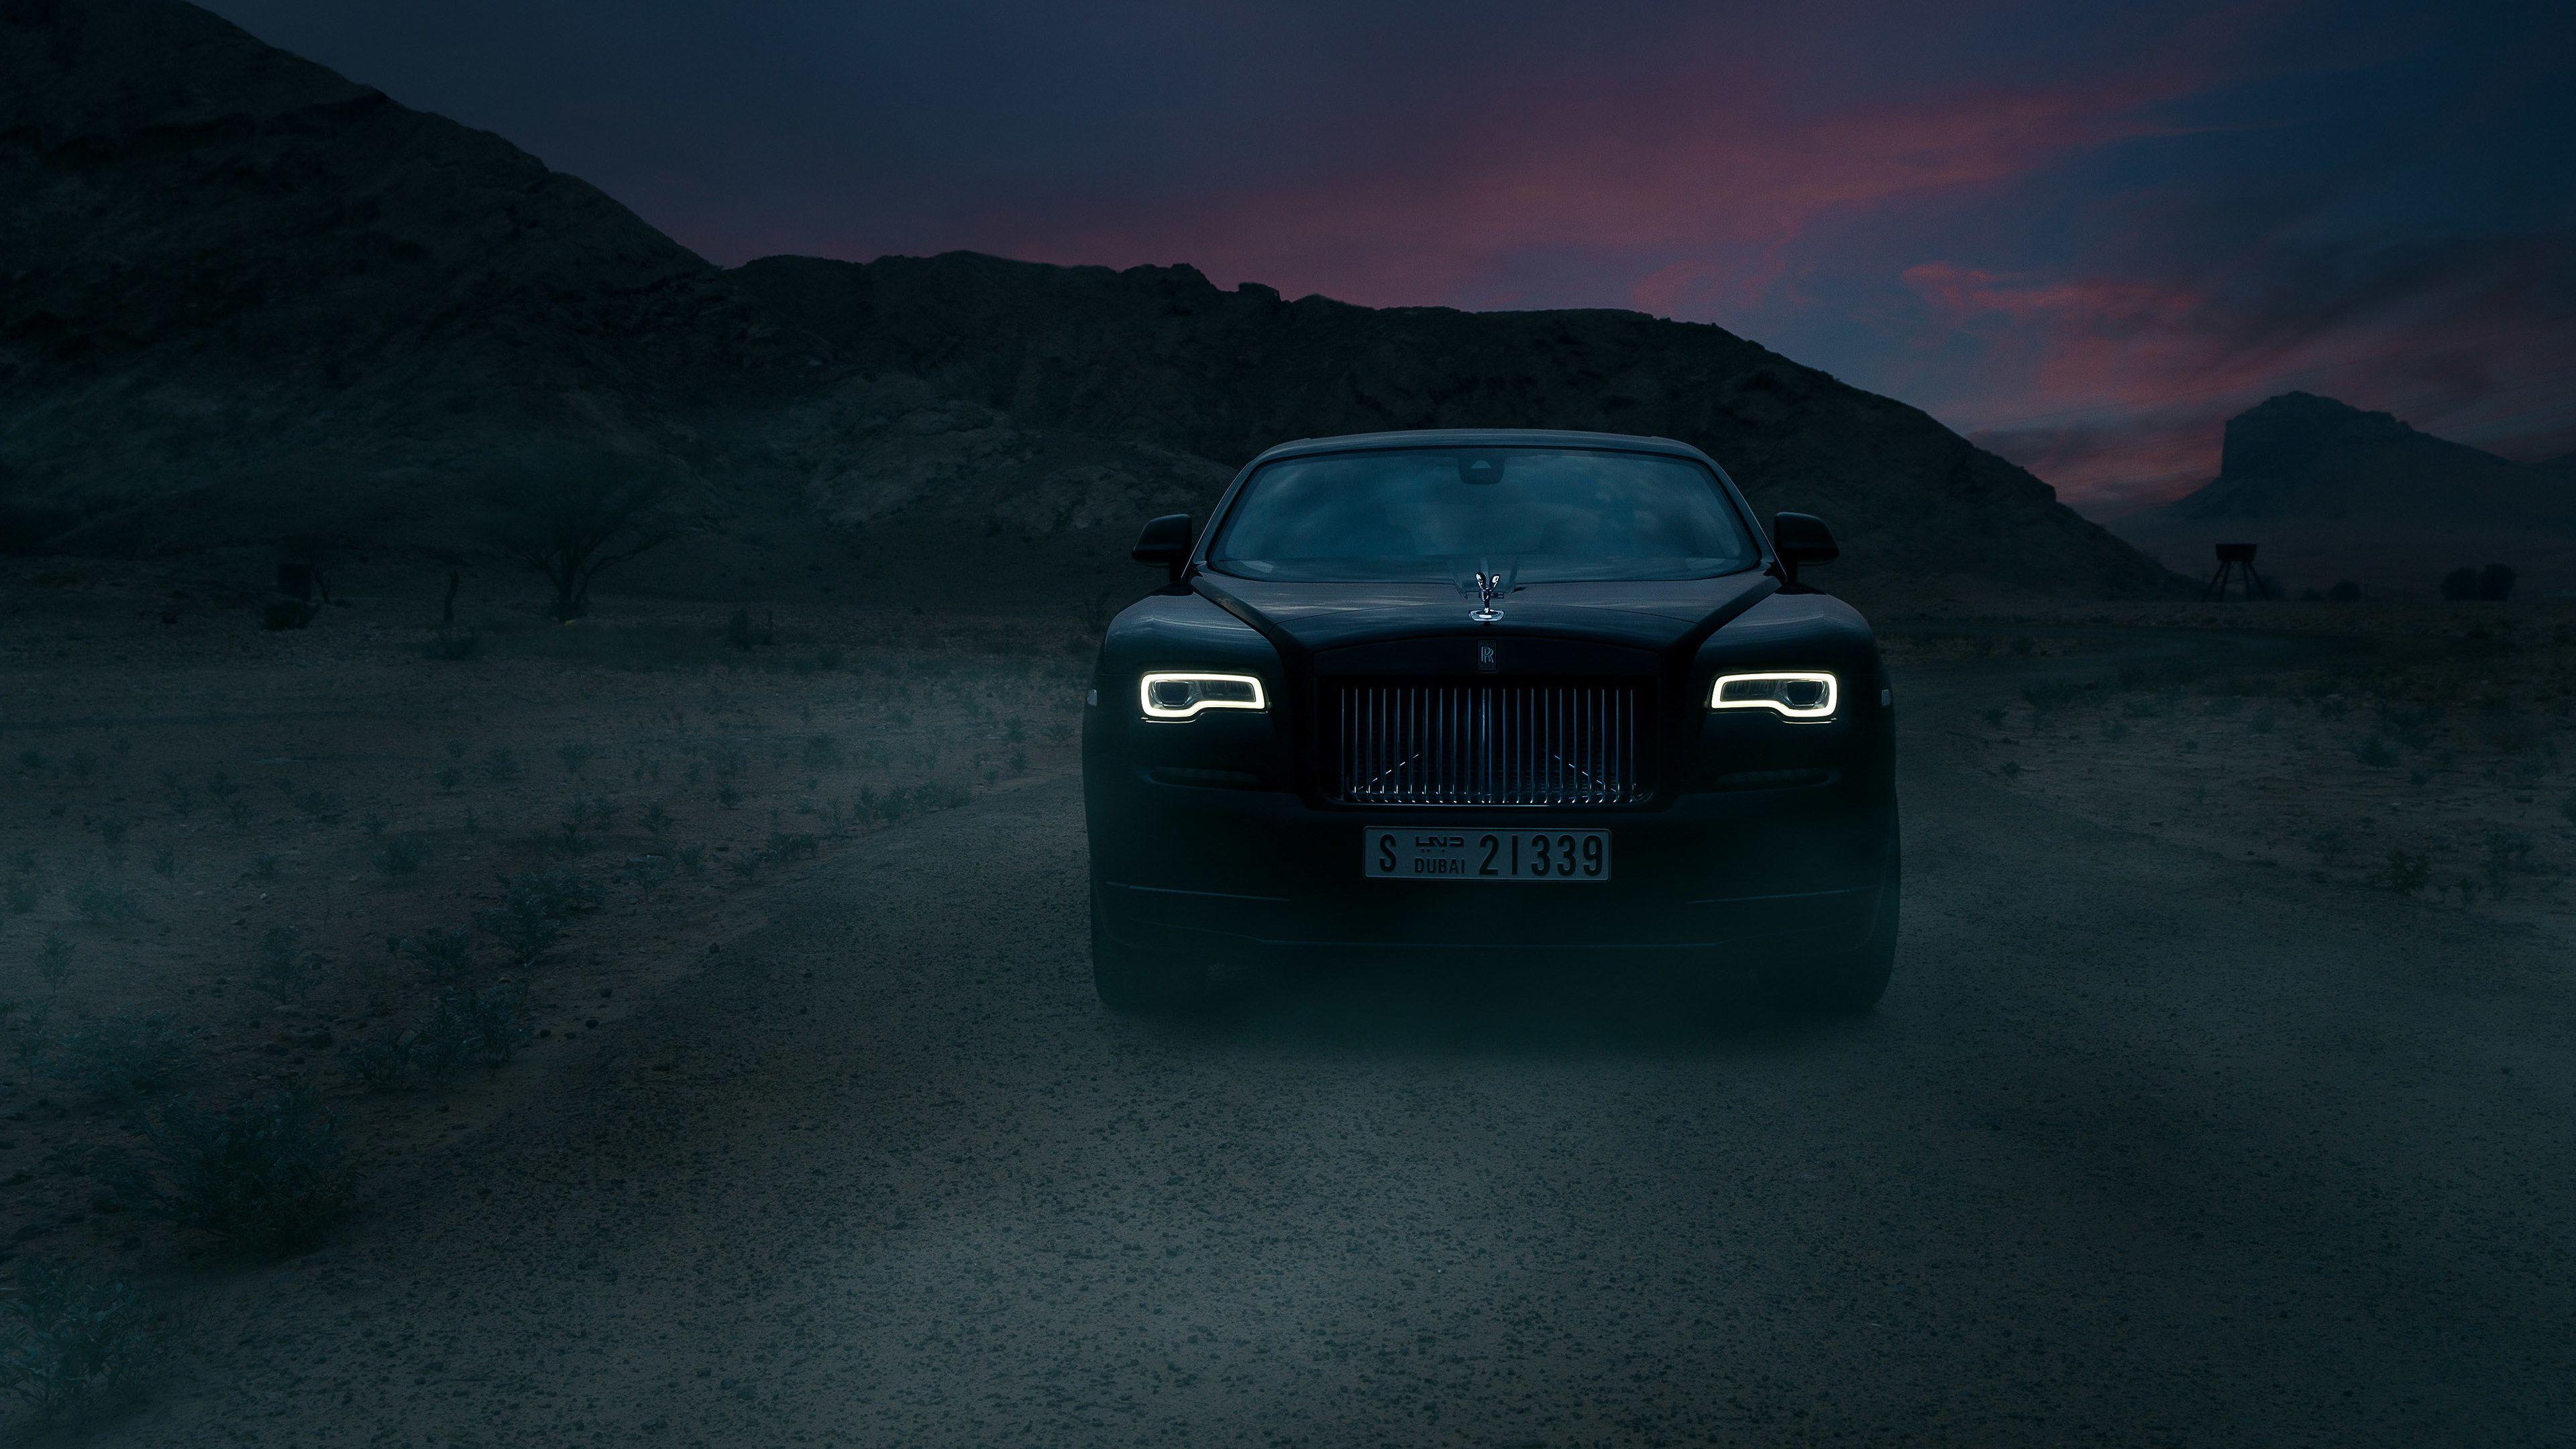 Rolls Royce Wraith Black Badge Rolls Royce Wraith Wallpaper, Rolls Royce Wallpaper, Hd Wallpaper, Da. Rolls Royce Wraith Black, Rolls Royce Wraith, Rolls Royce